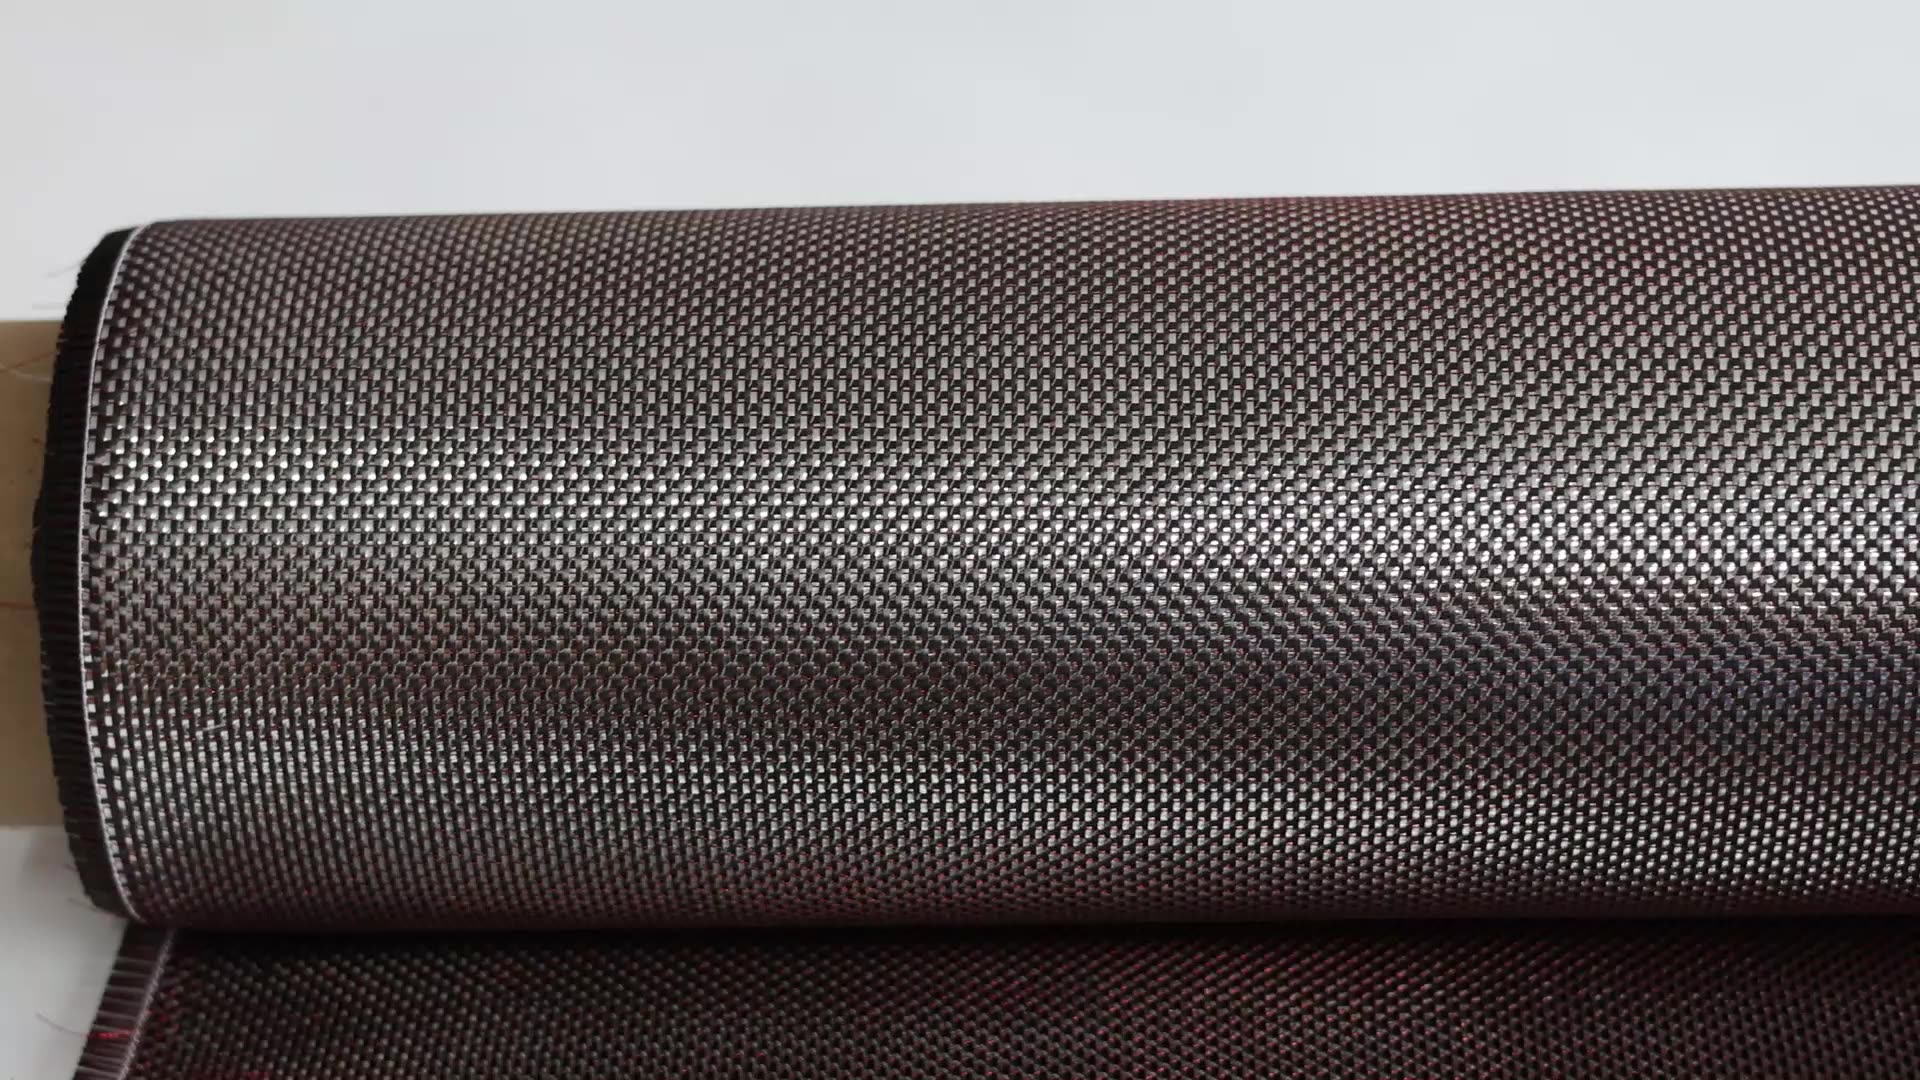 3K glitter carbon fiber cloth fabric roll1